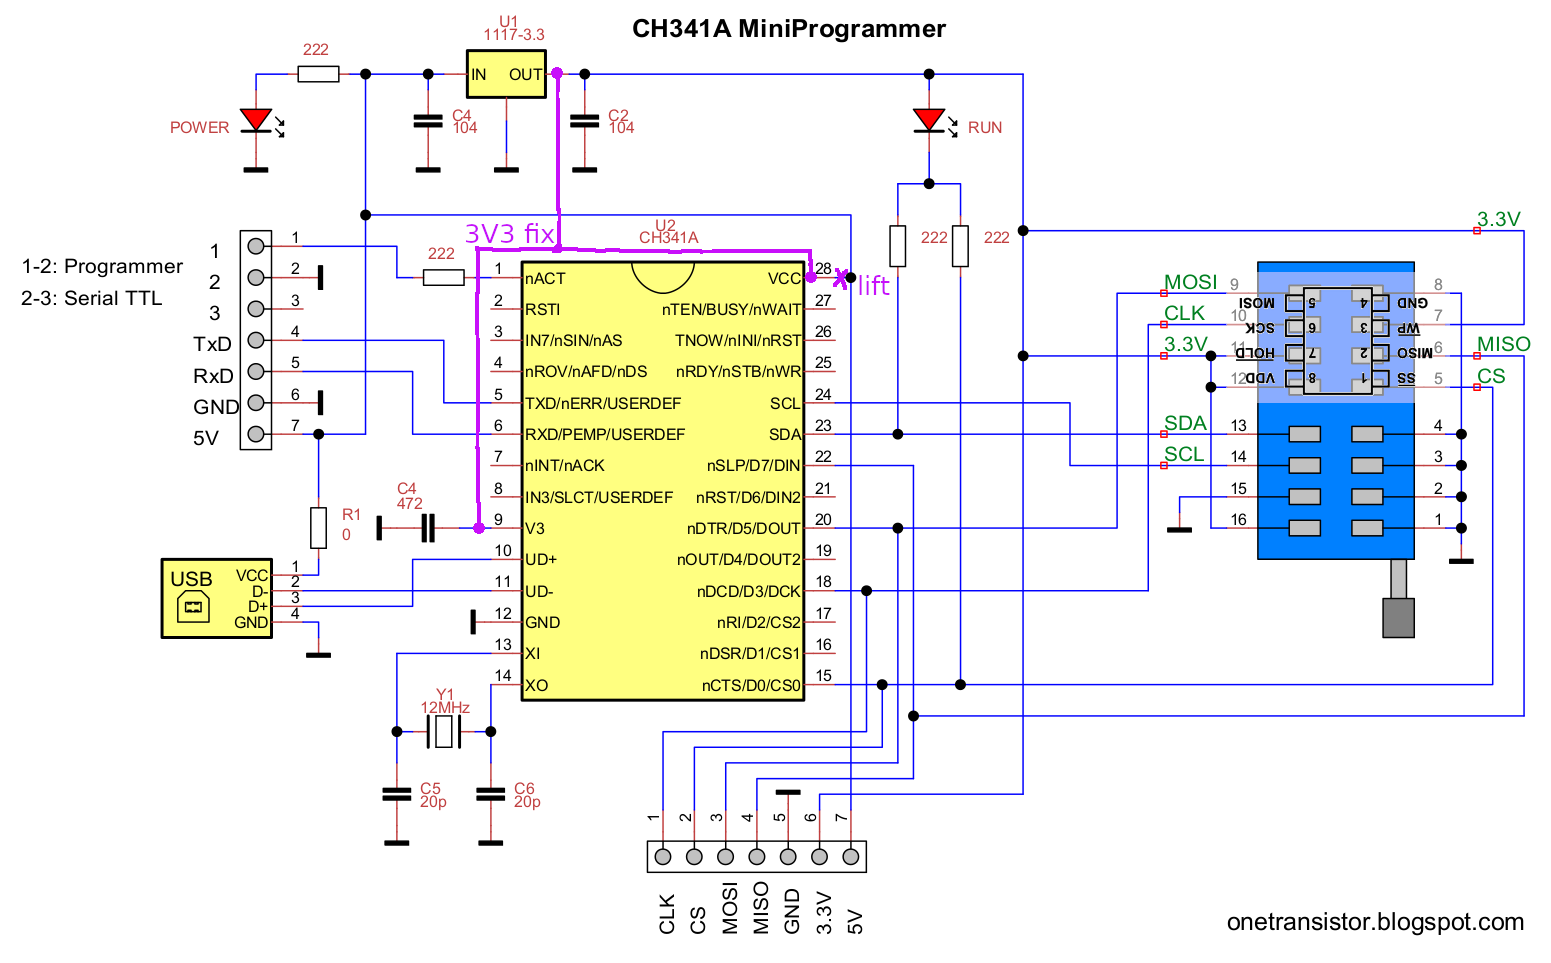 ch341a_miniprogrammer_schematic.png